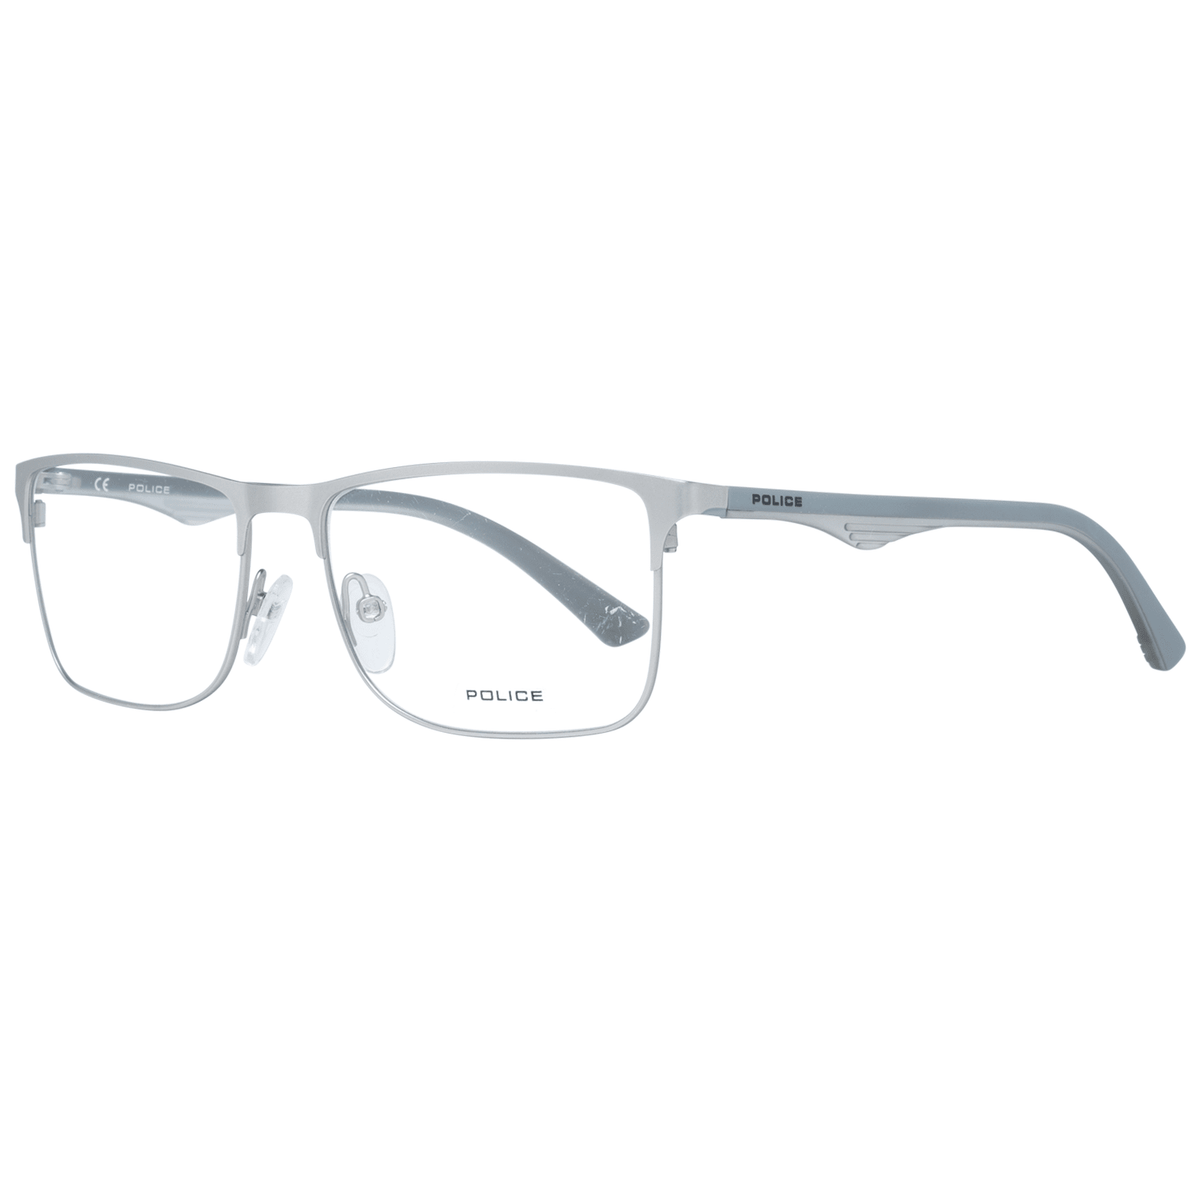 Grey Men Optical Frames